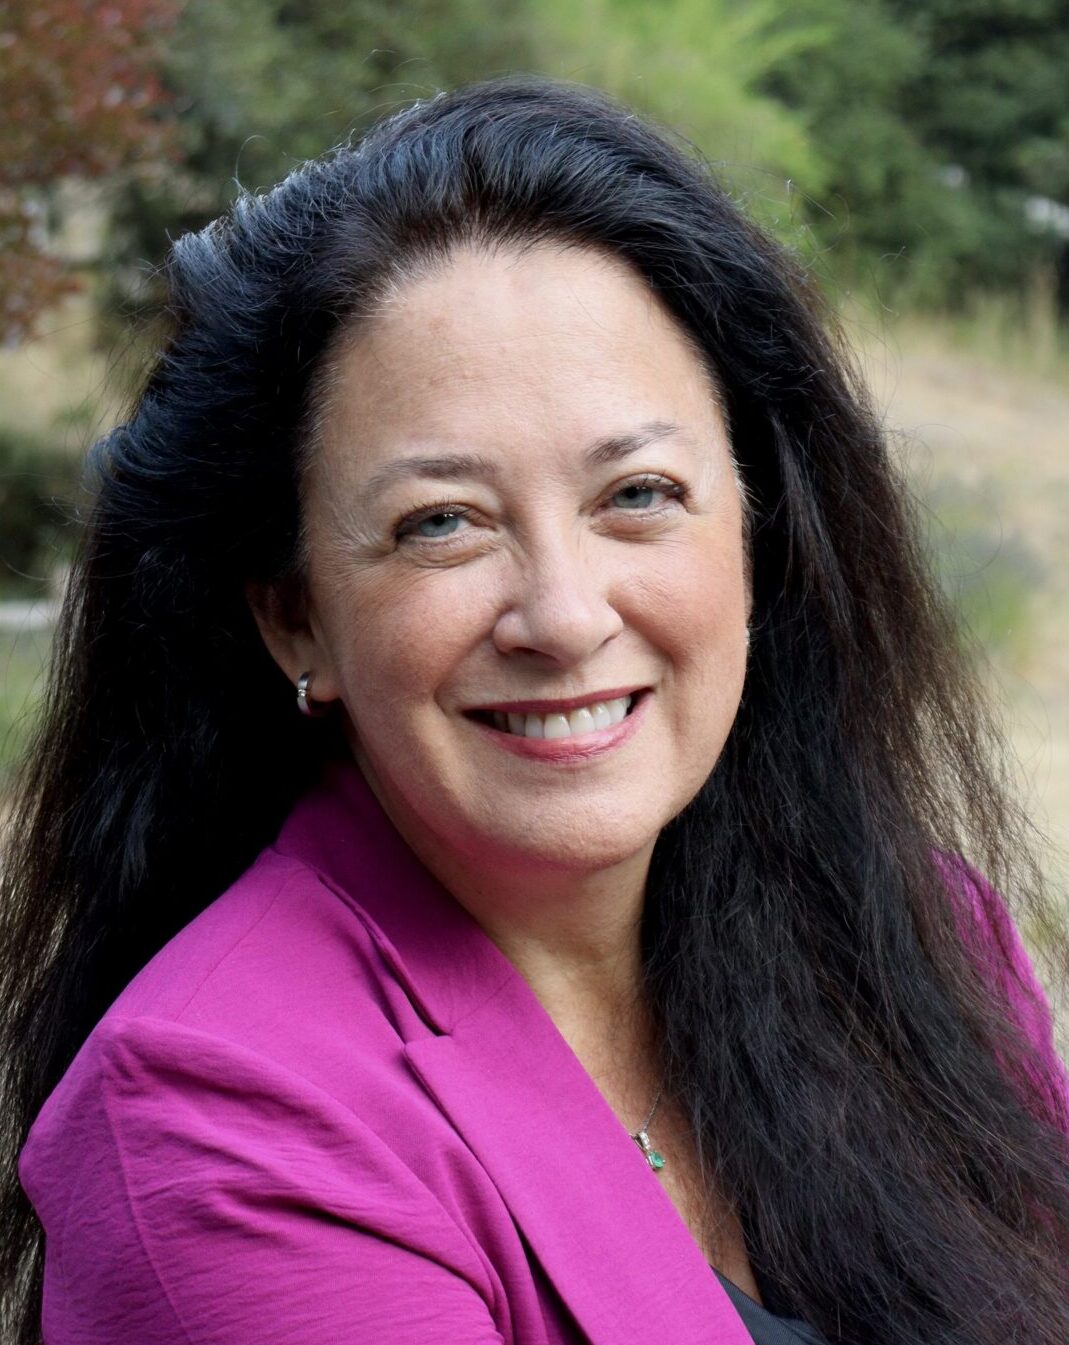 Kim De Serpa is a candidate for District 2 Santa Cruz County supervisor.